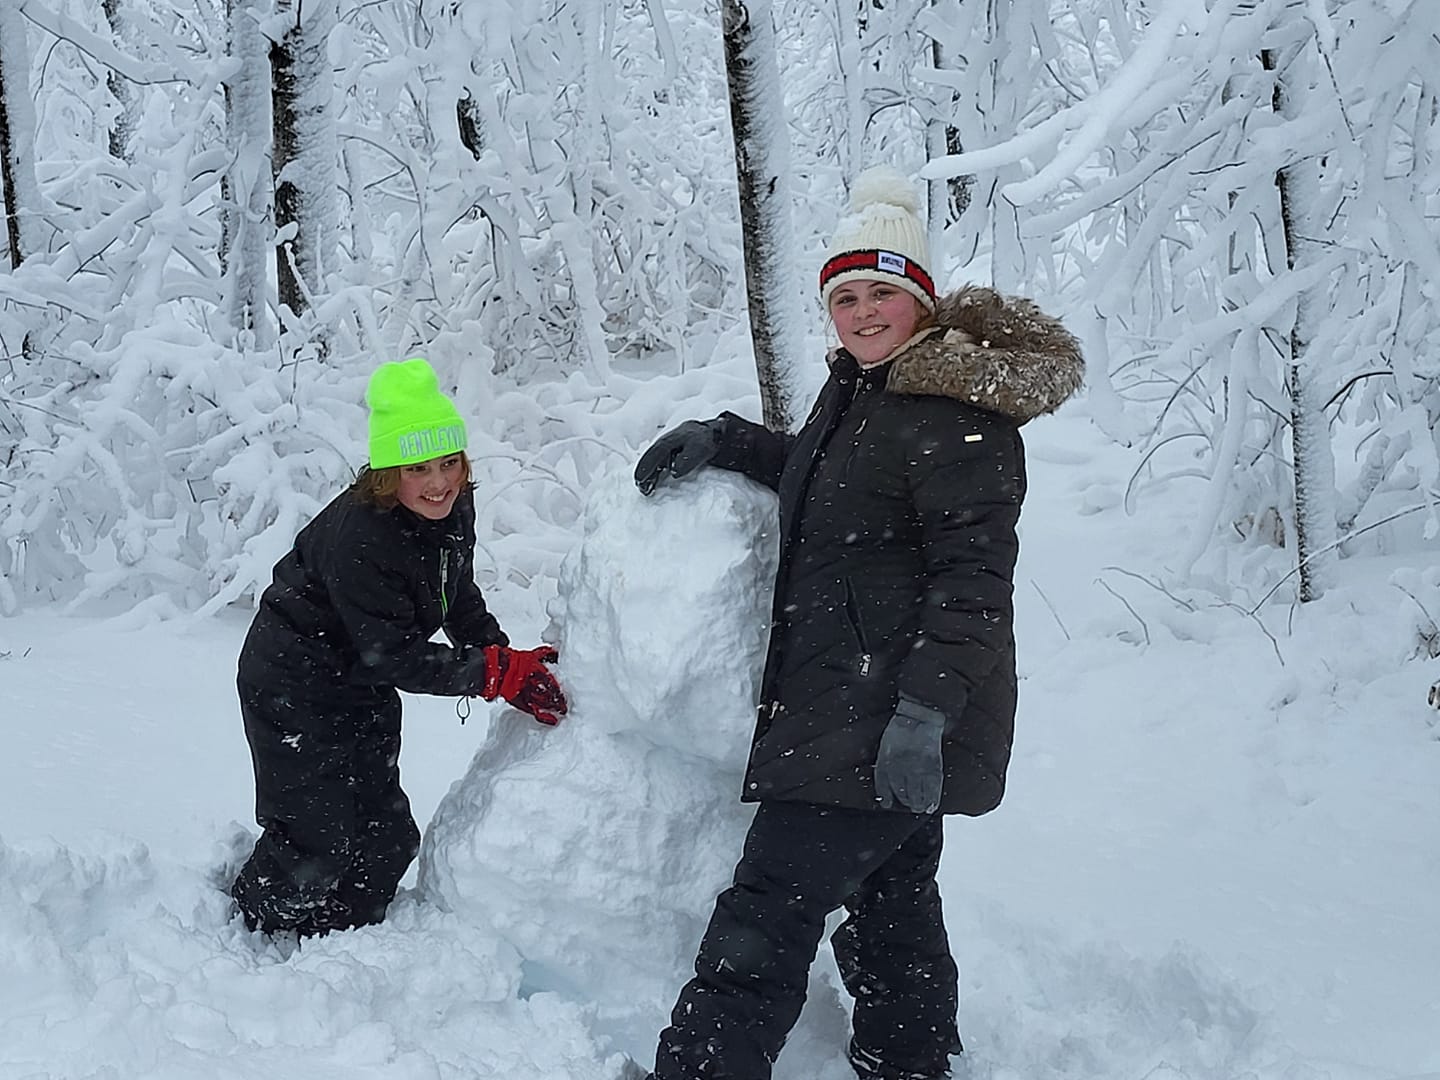 Boys building snowman